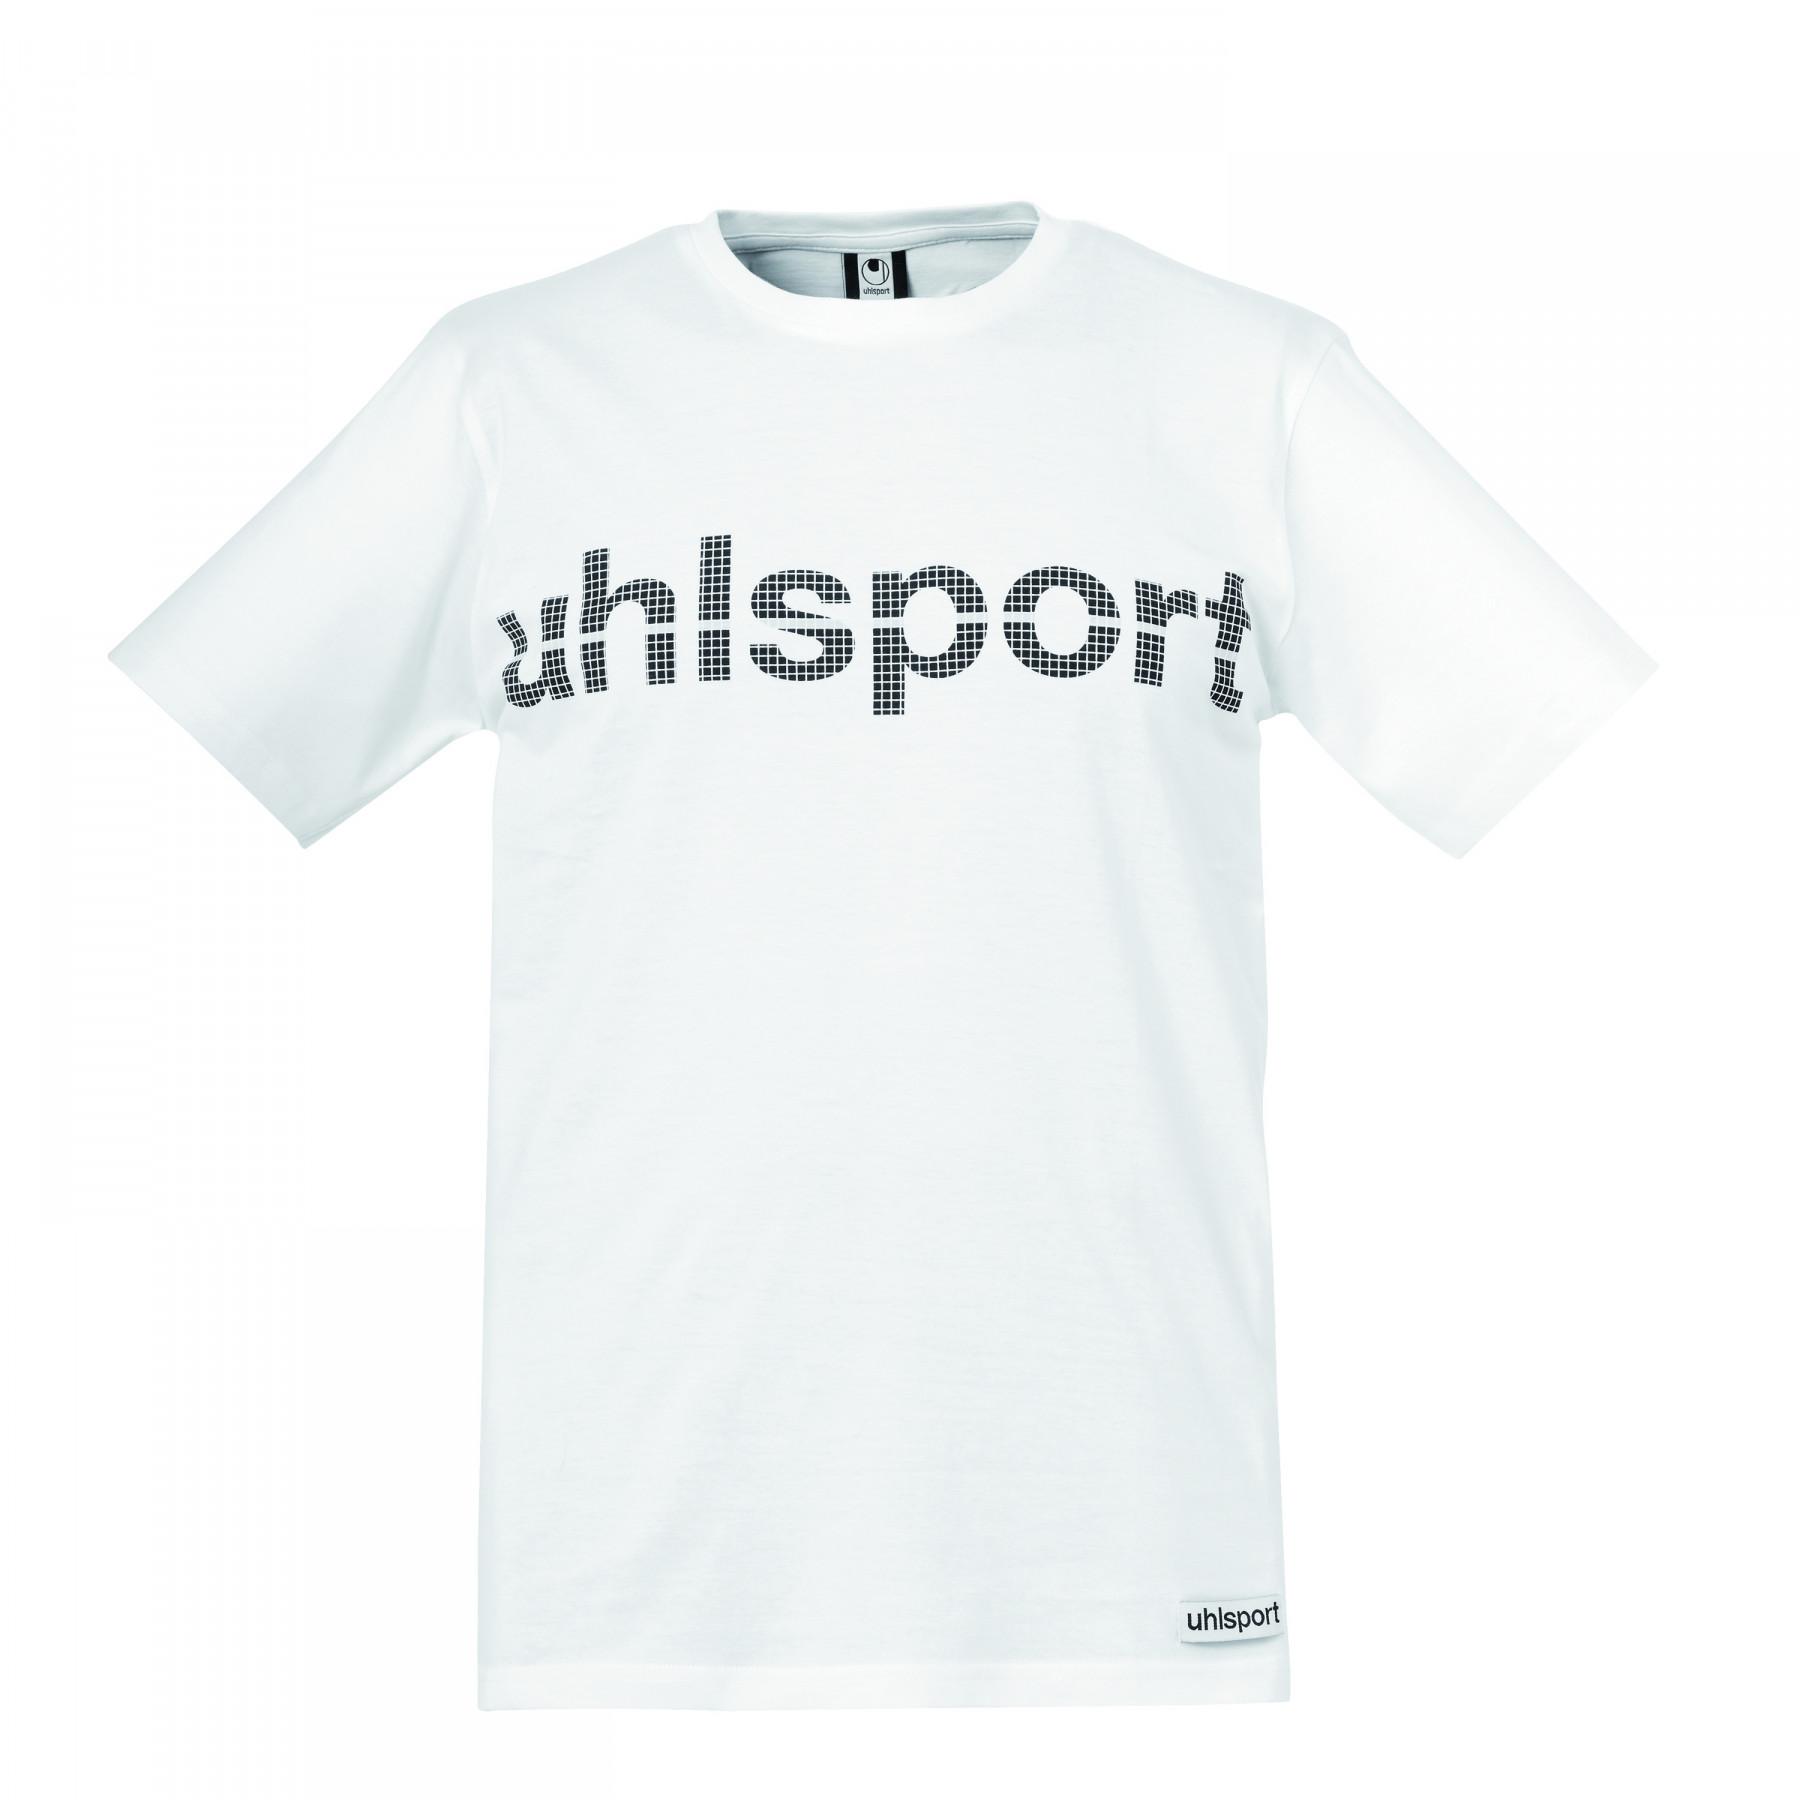 Promotional T-shirt Uhlsport Essential